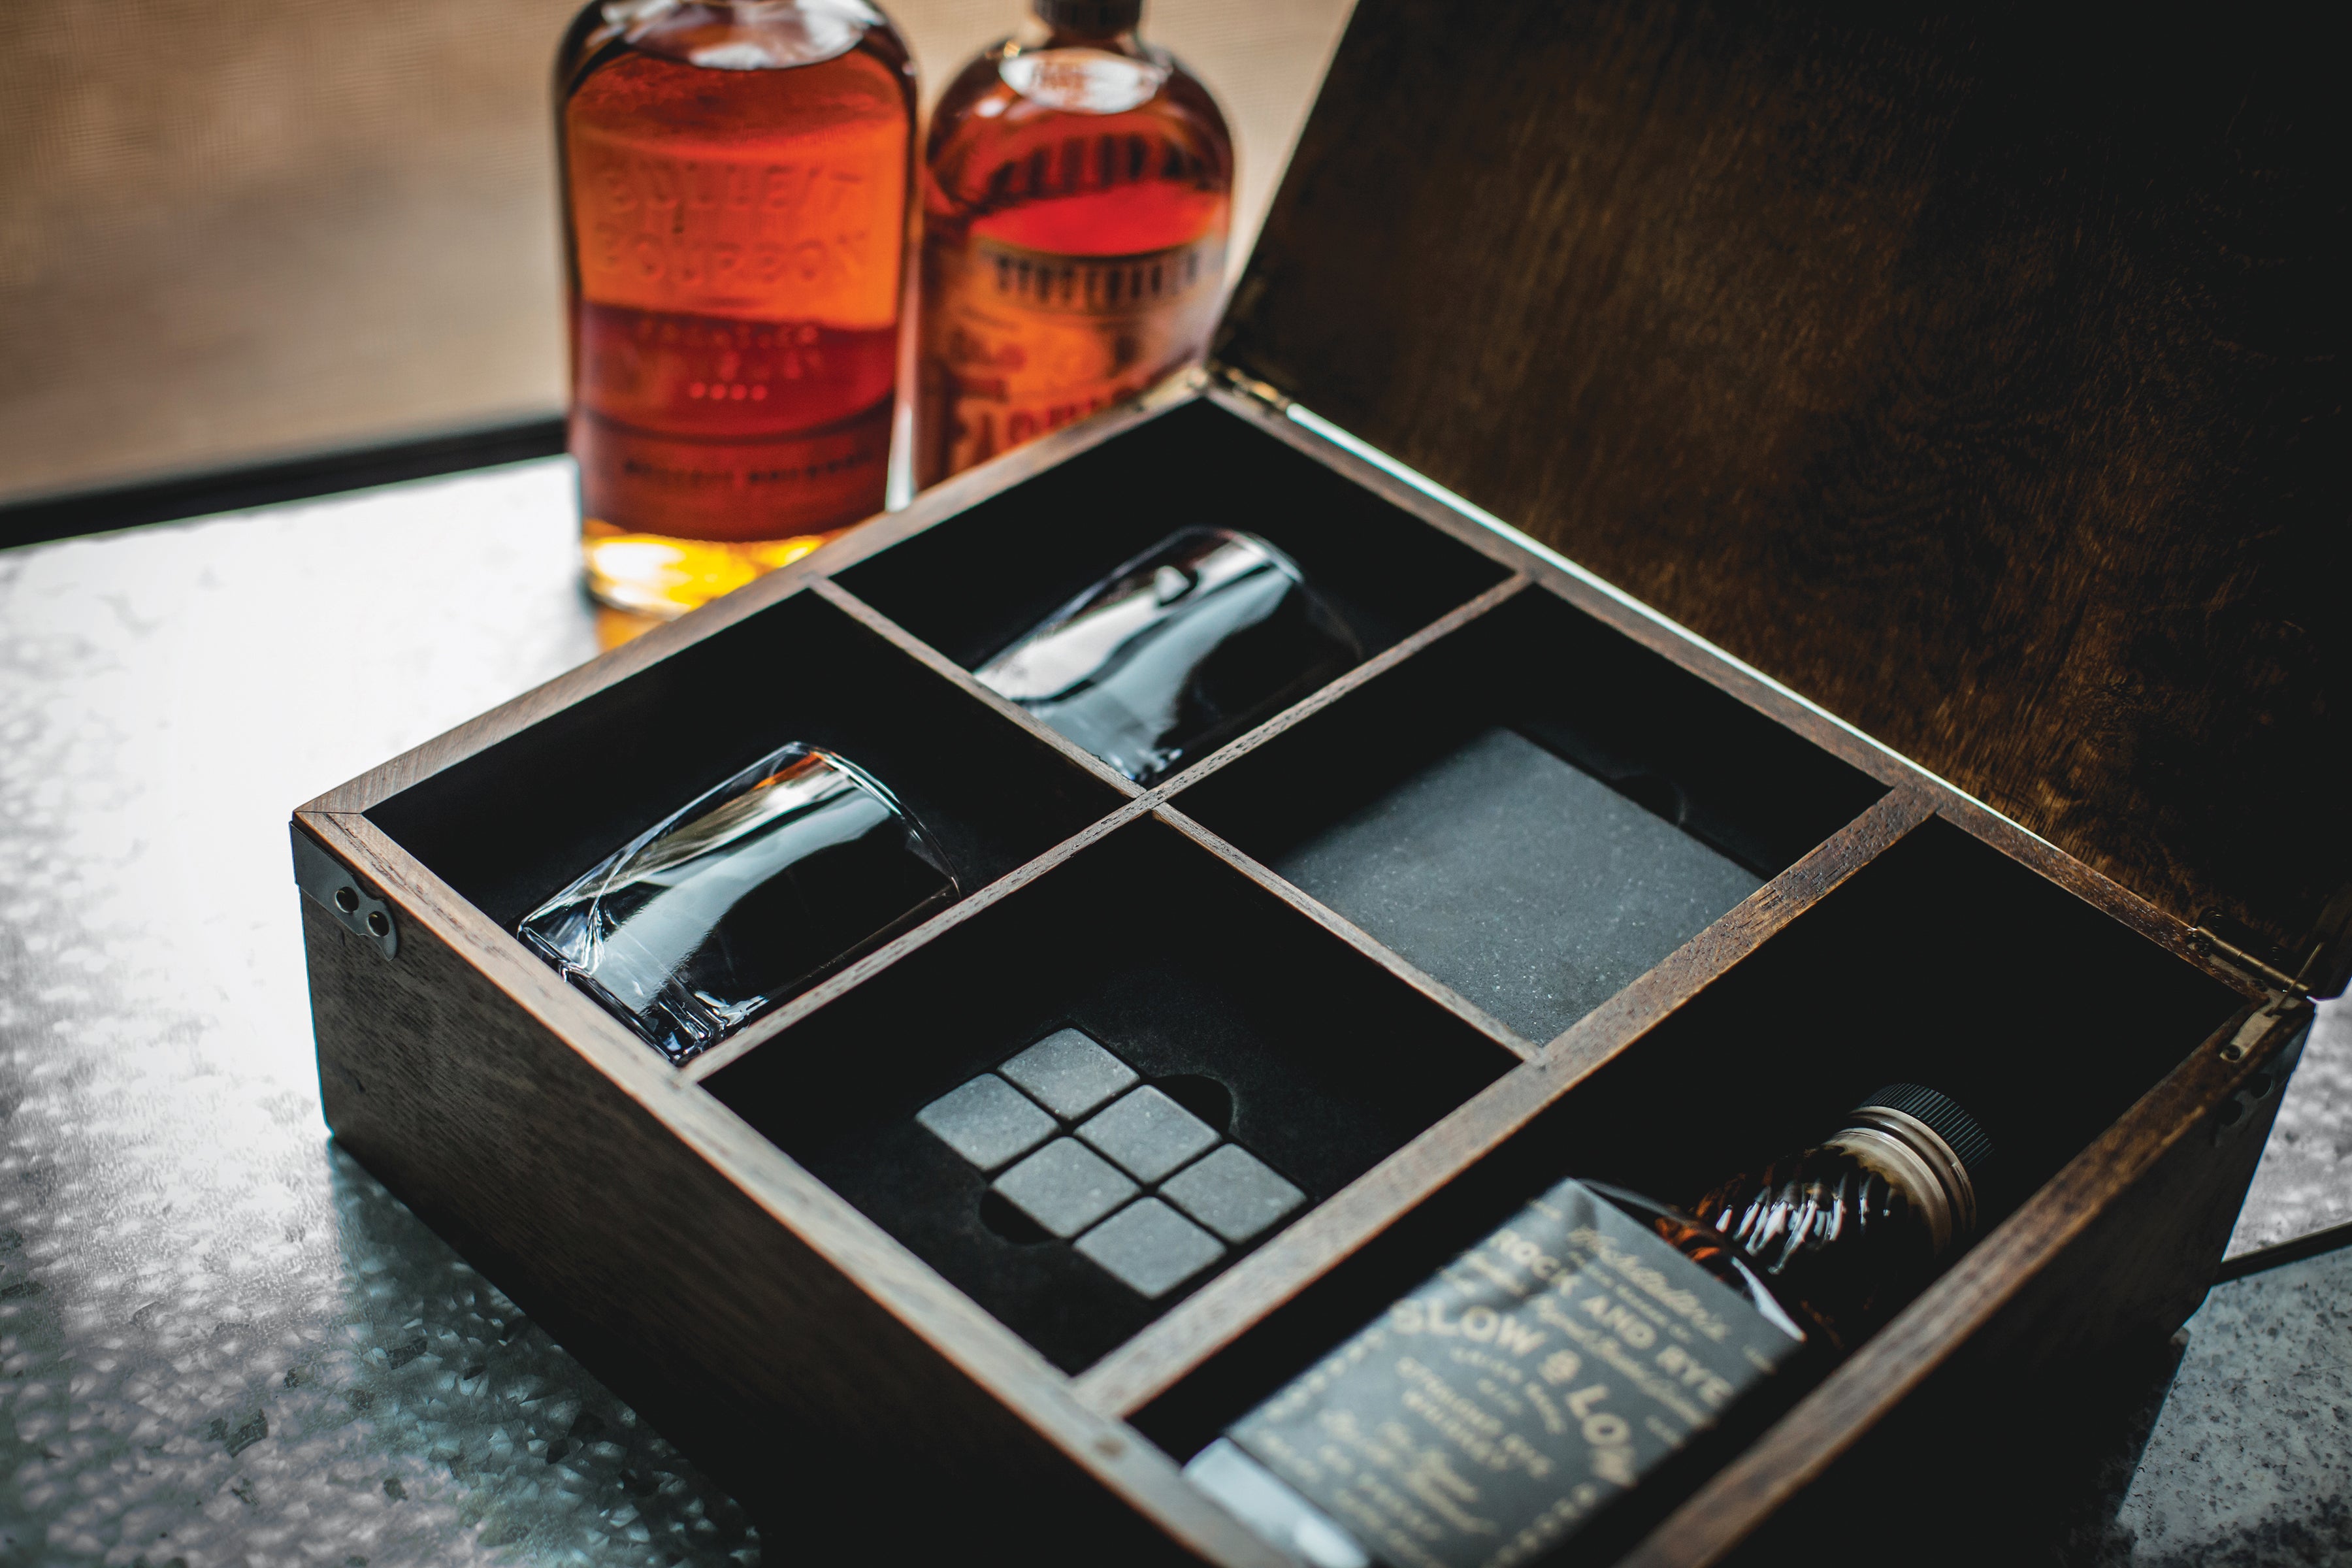 Philadelphia Flyers - Whiskey Box Gift Set